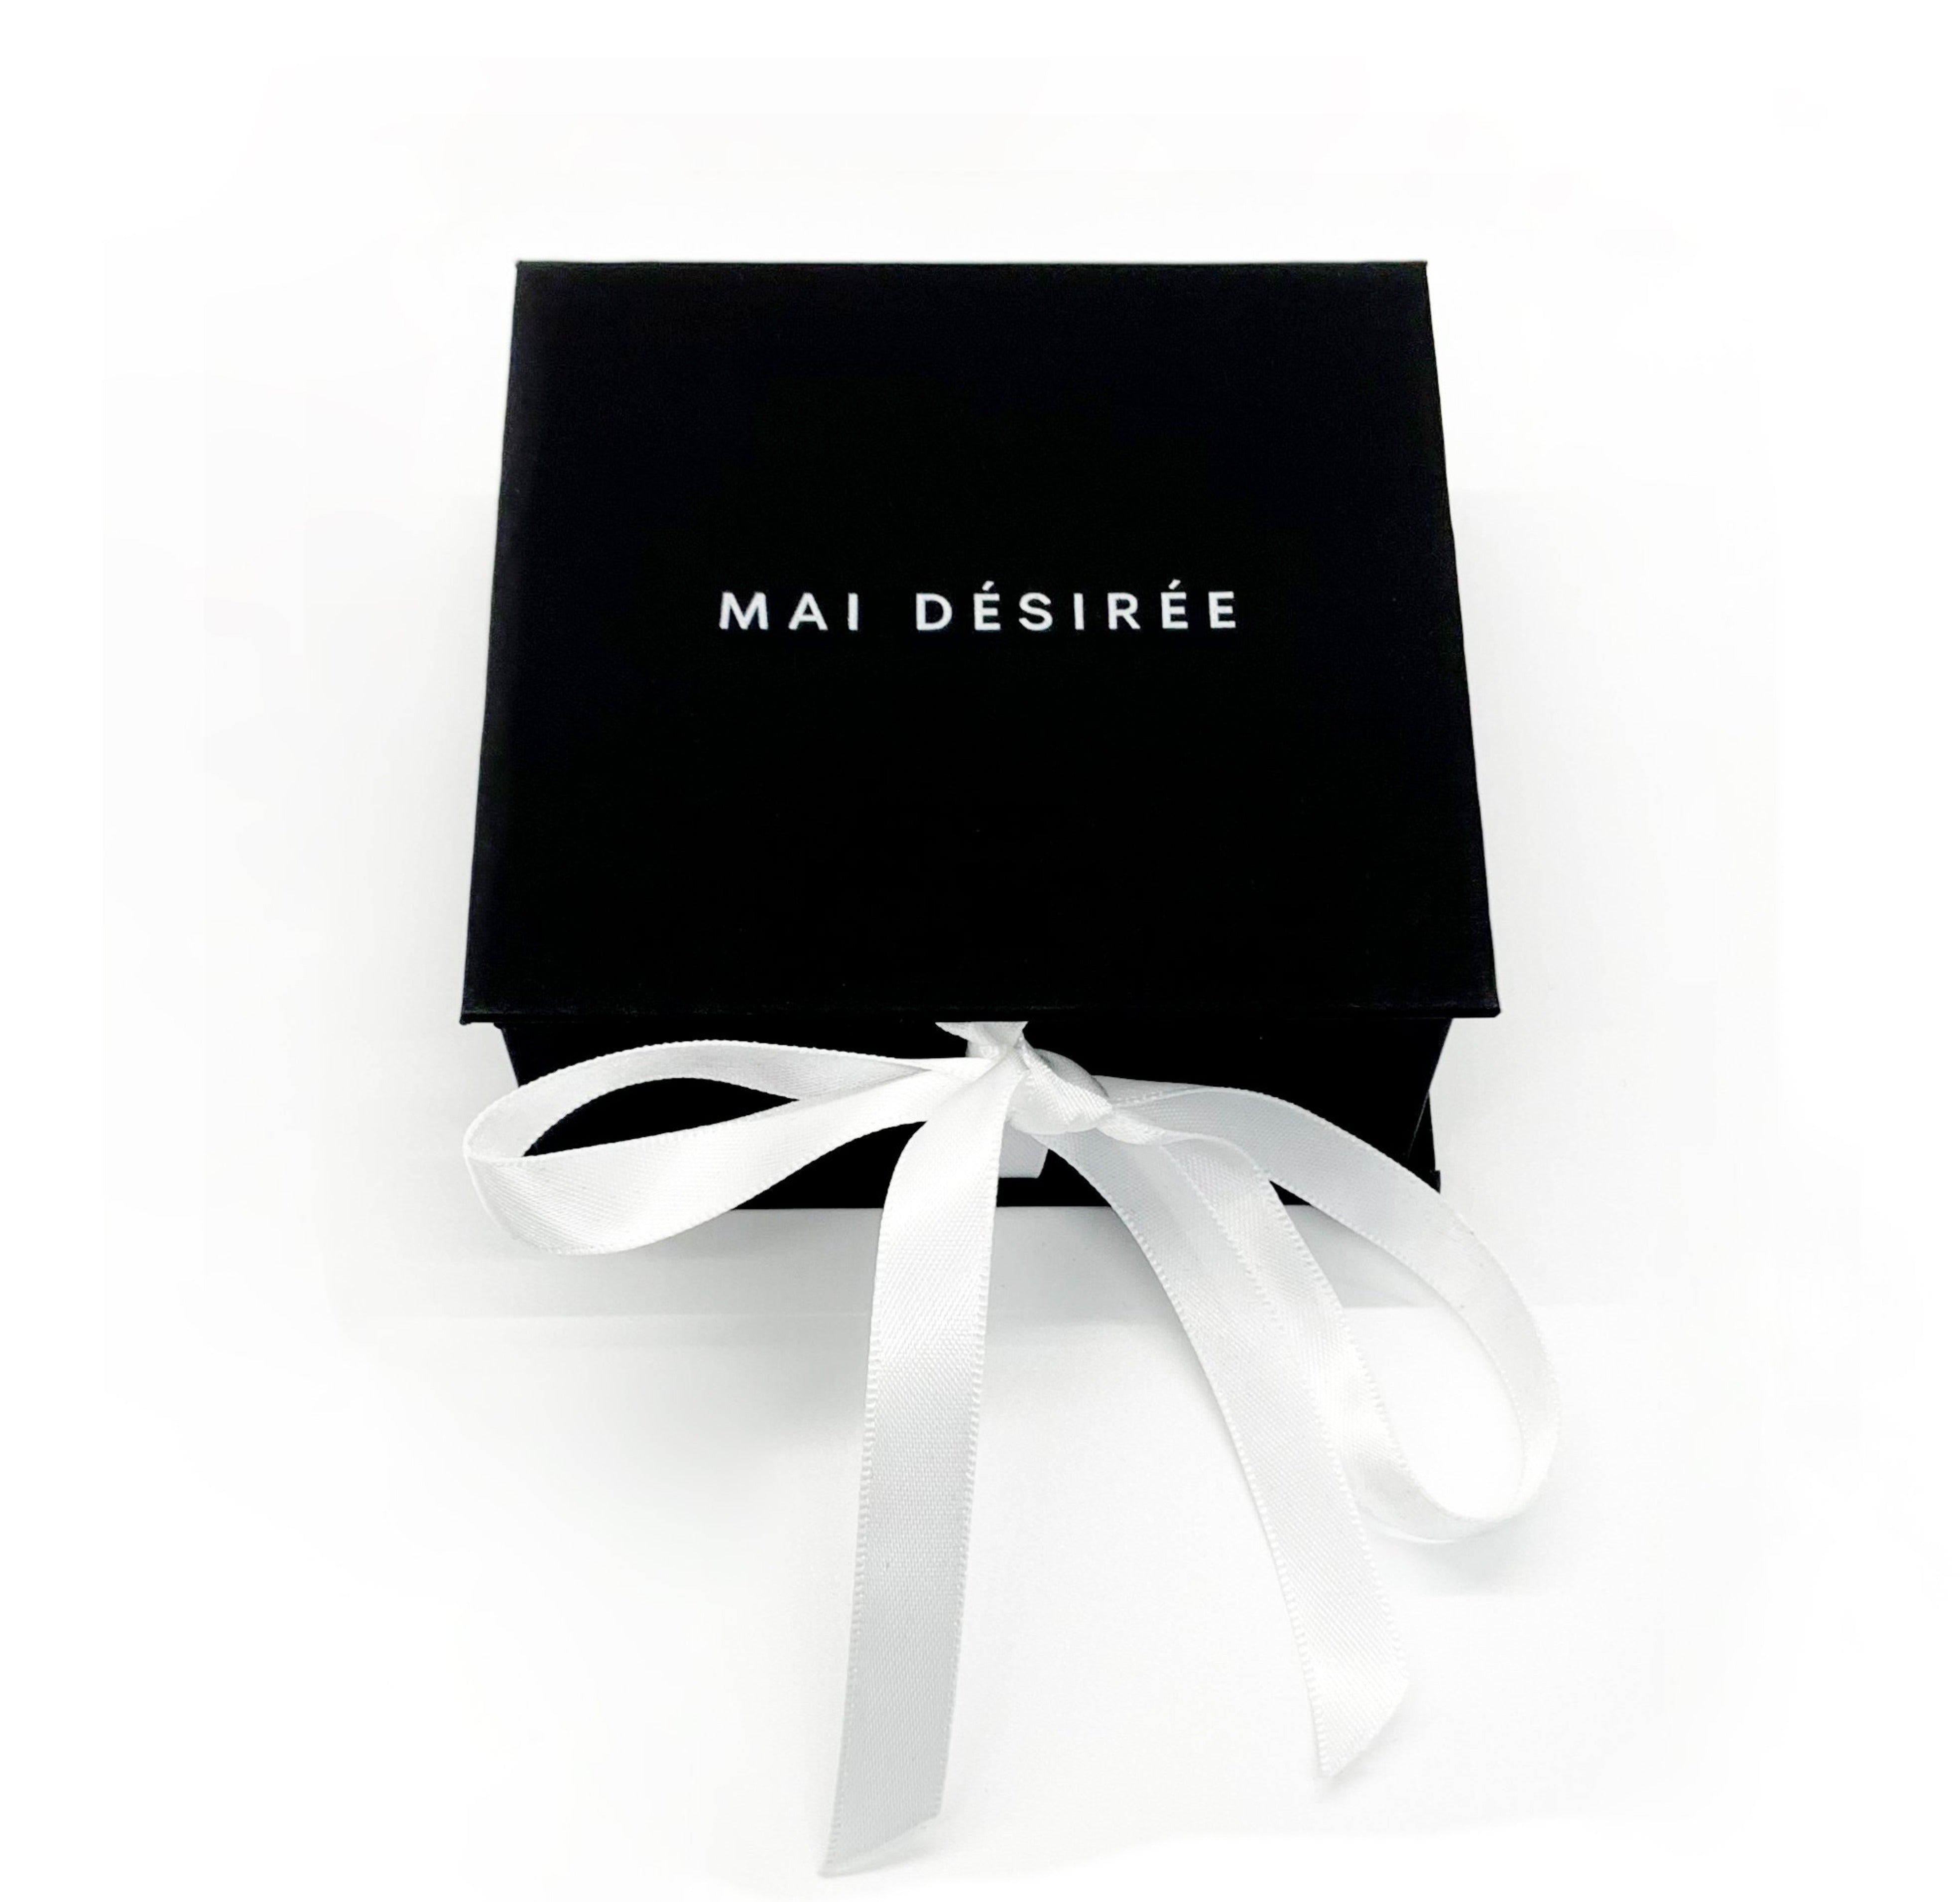 Mai Desiree jewelry gift box